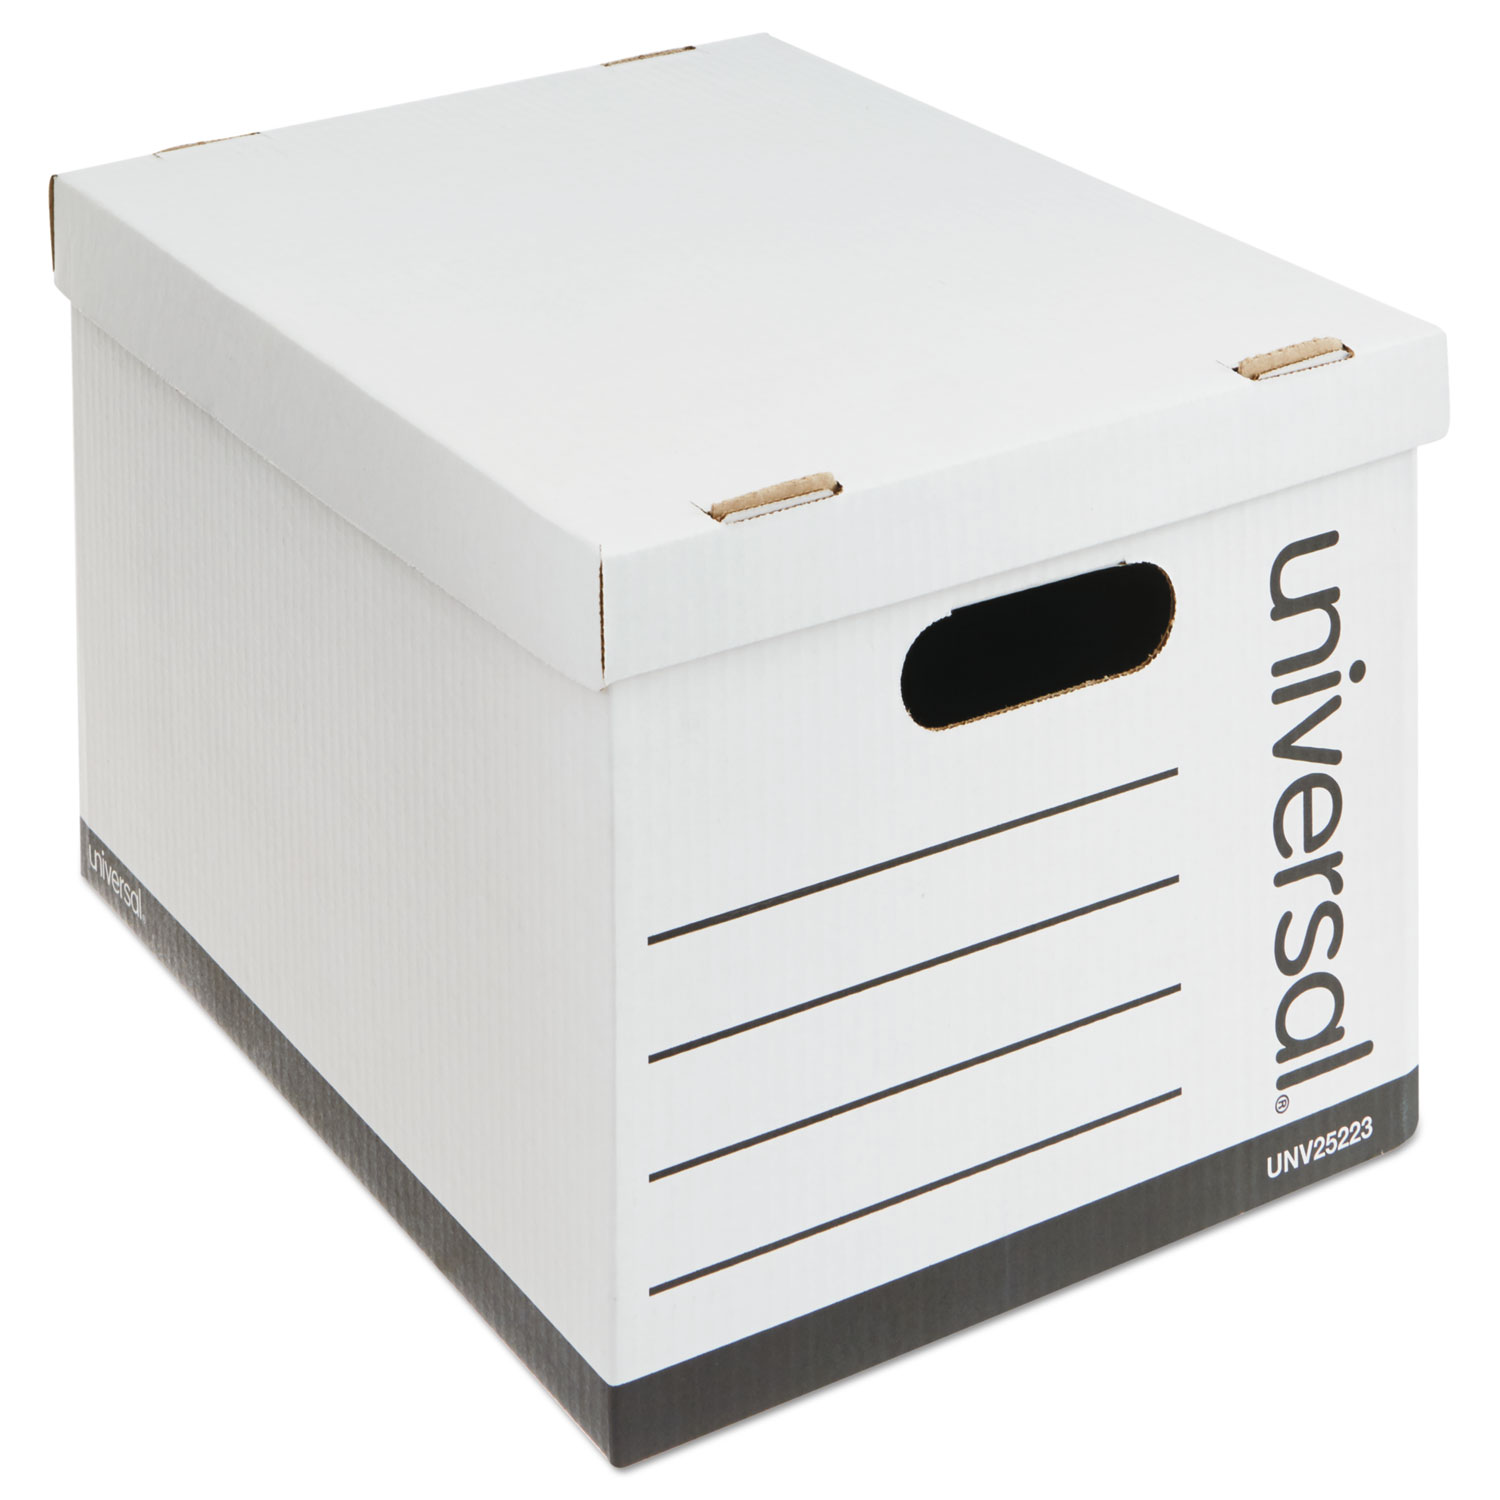  Universal 9523001 Basic-Duty Economy Record Storage Boxes, Letter/Legal Files, 12 x 15 x 10, White, 10/Carton (UNV25223) 